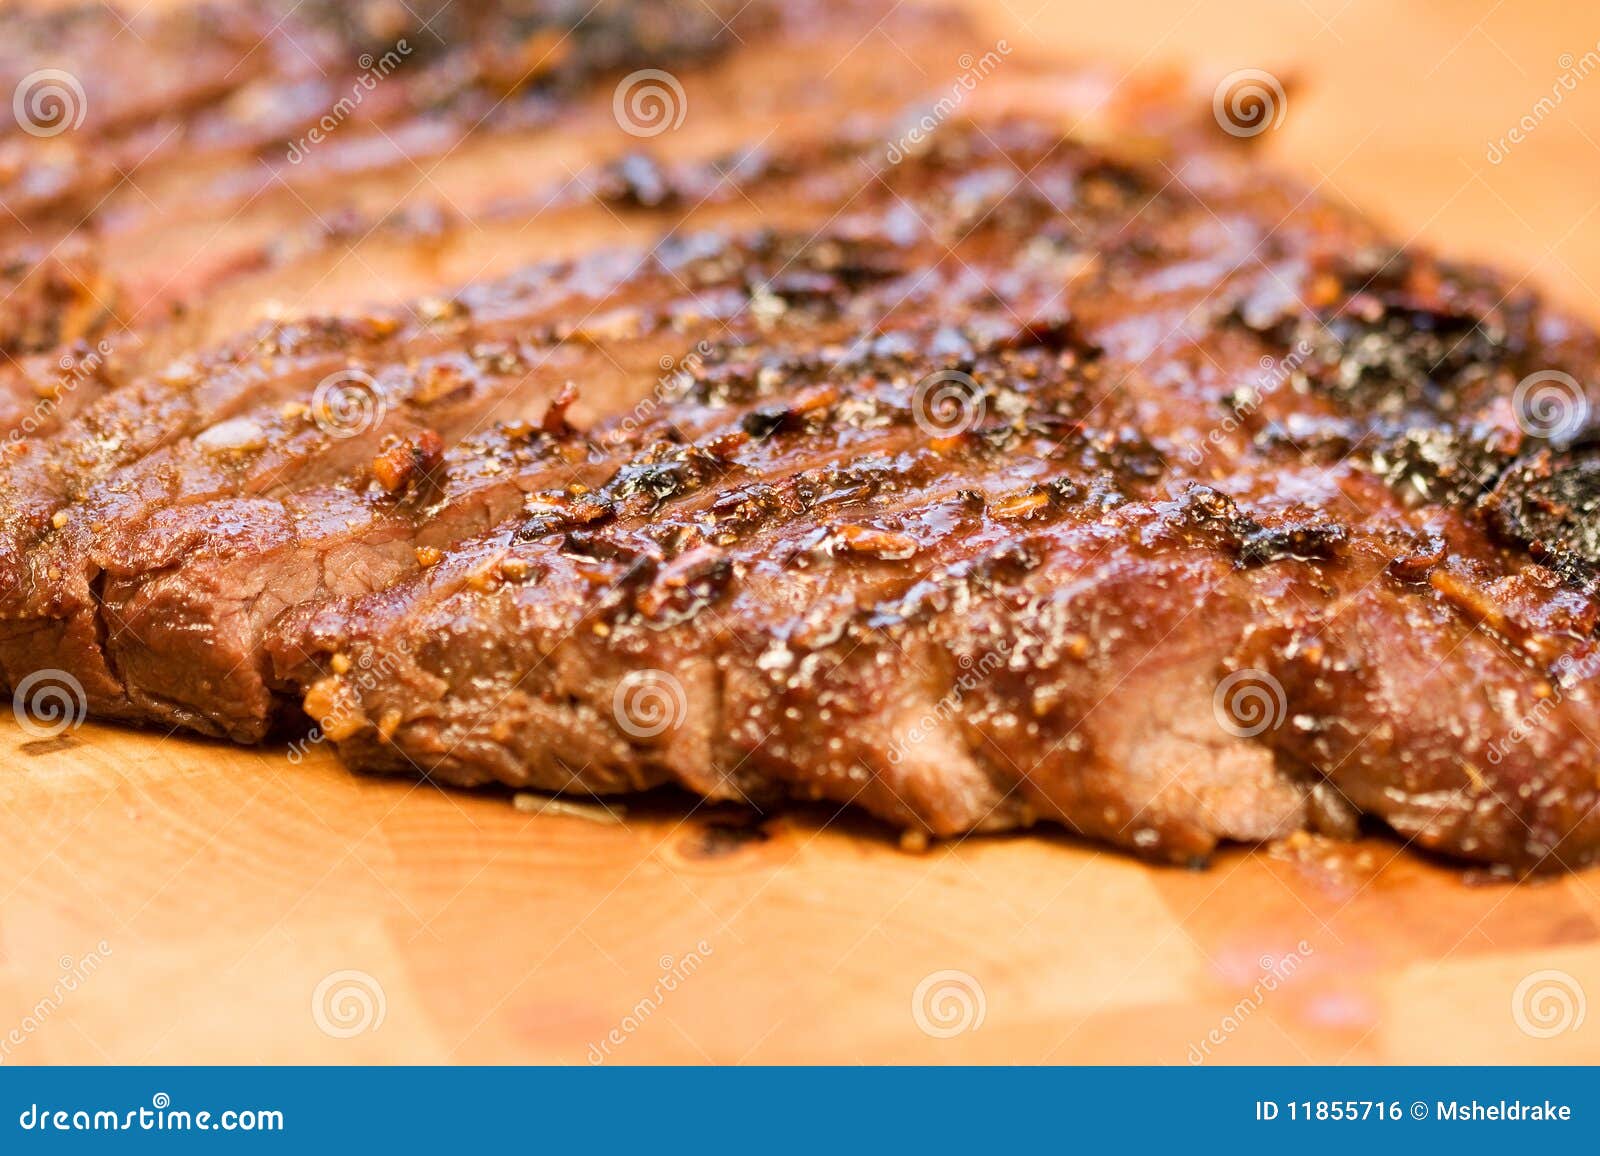 whole flank steak